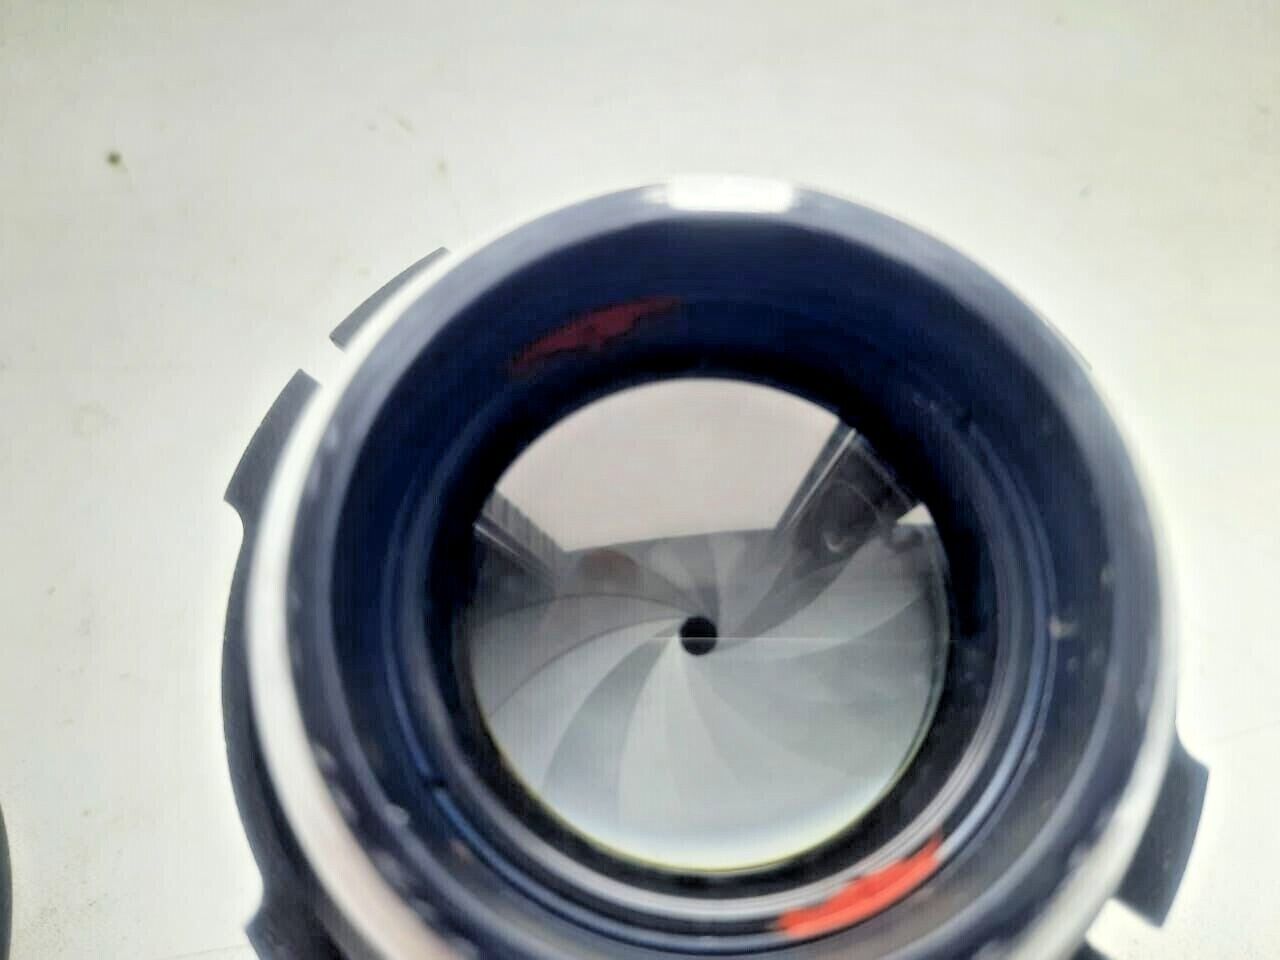 ARRI PL-Mount OKC Jupiter-9 F2 85mm Arri RED Aaton Alexa BMPCC LOMO cinema lens